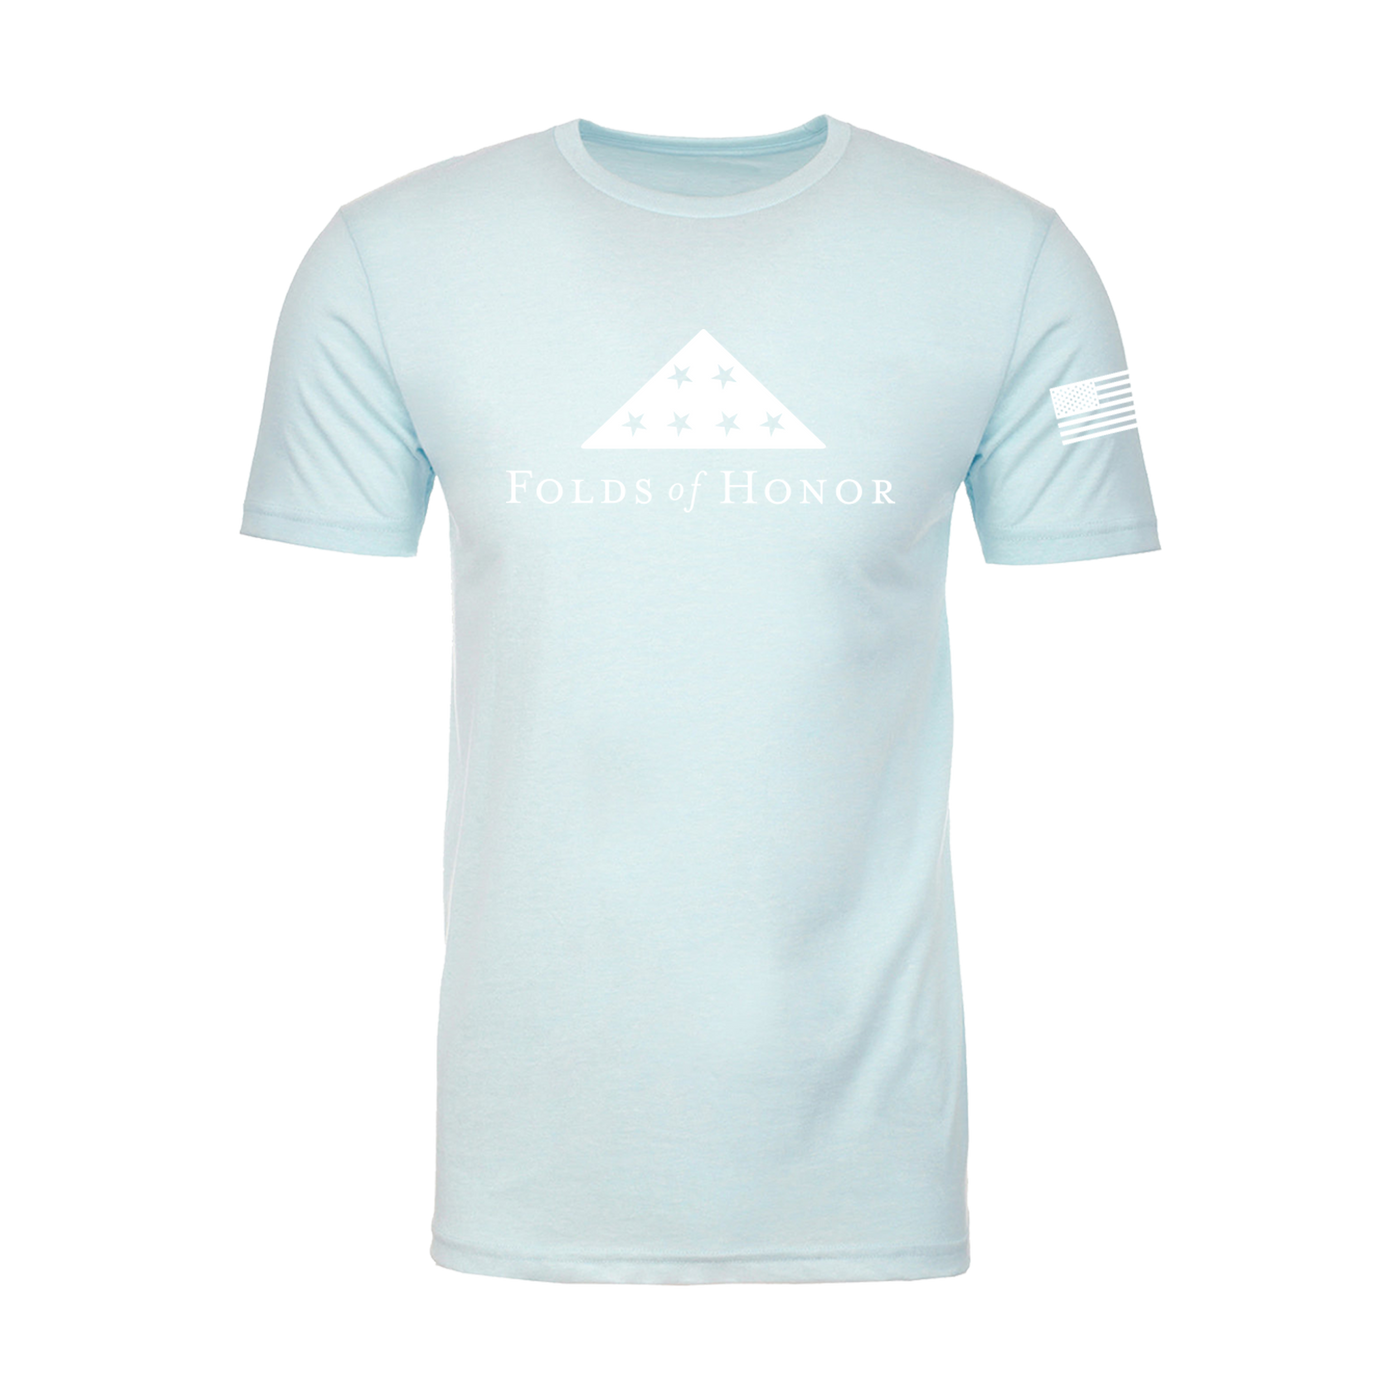 Logo T-Shirt - Ice Blue and White